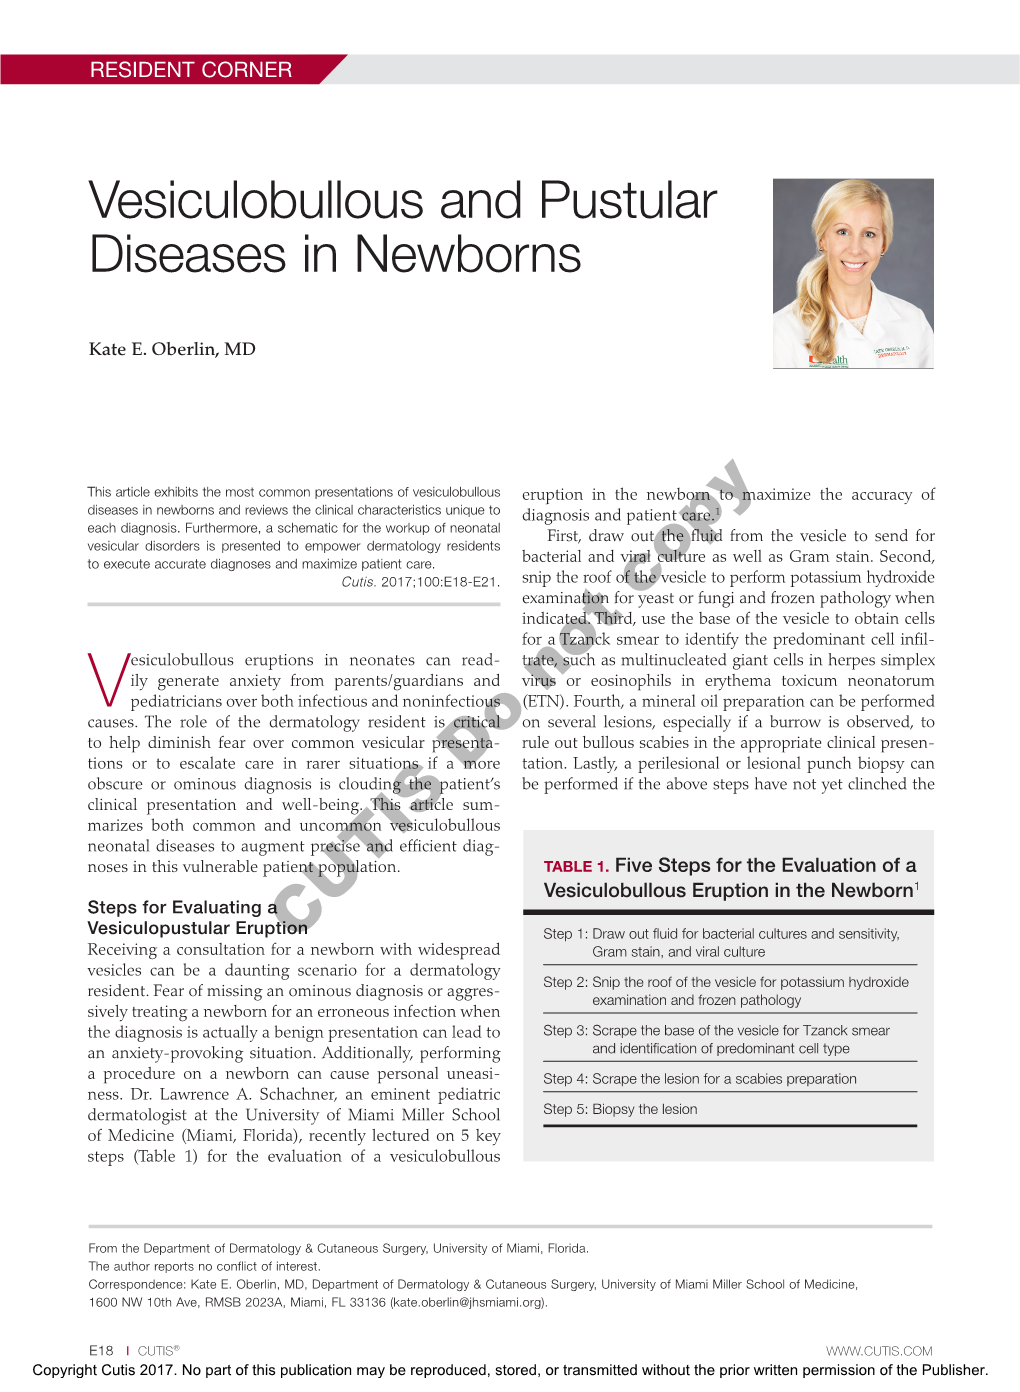 Vesiculobullous and Pustular Diseases in Newborns